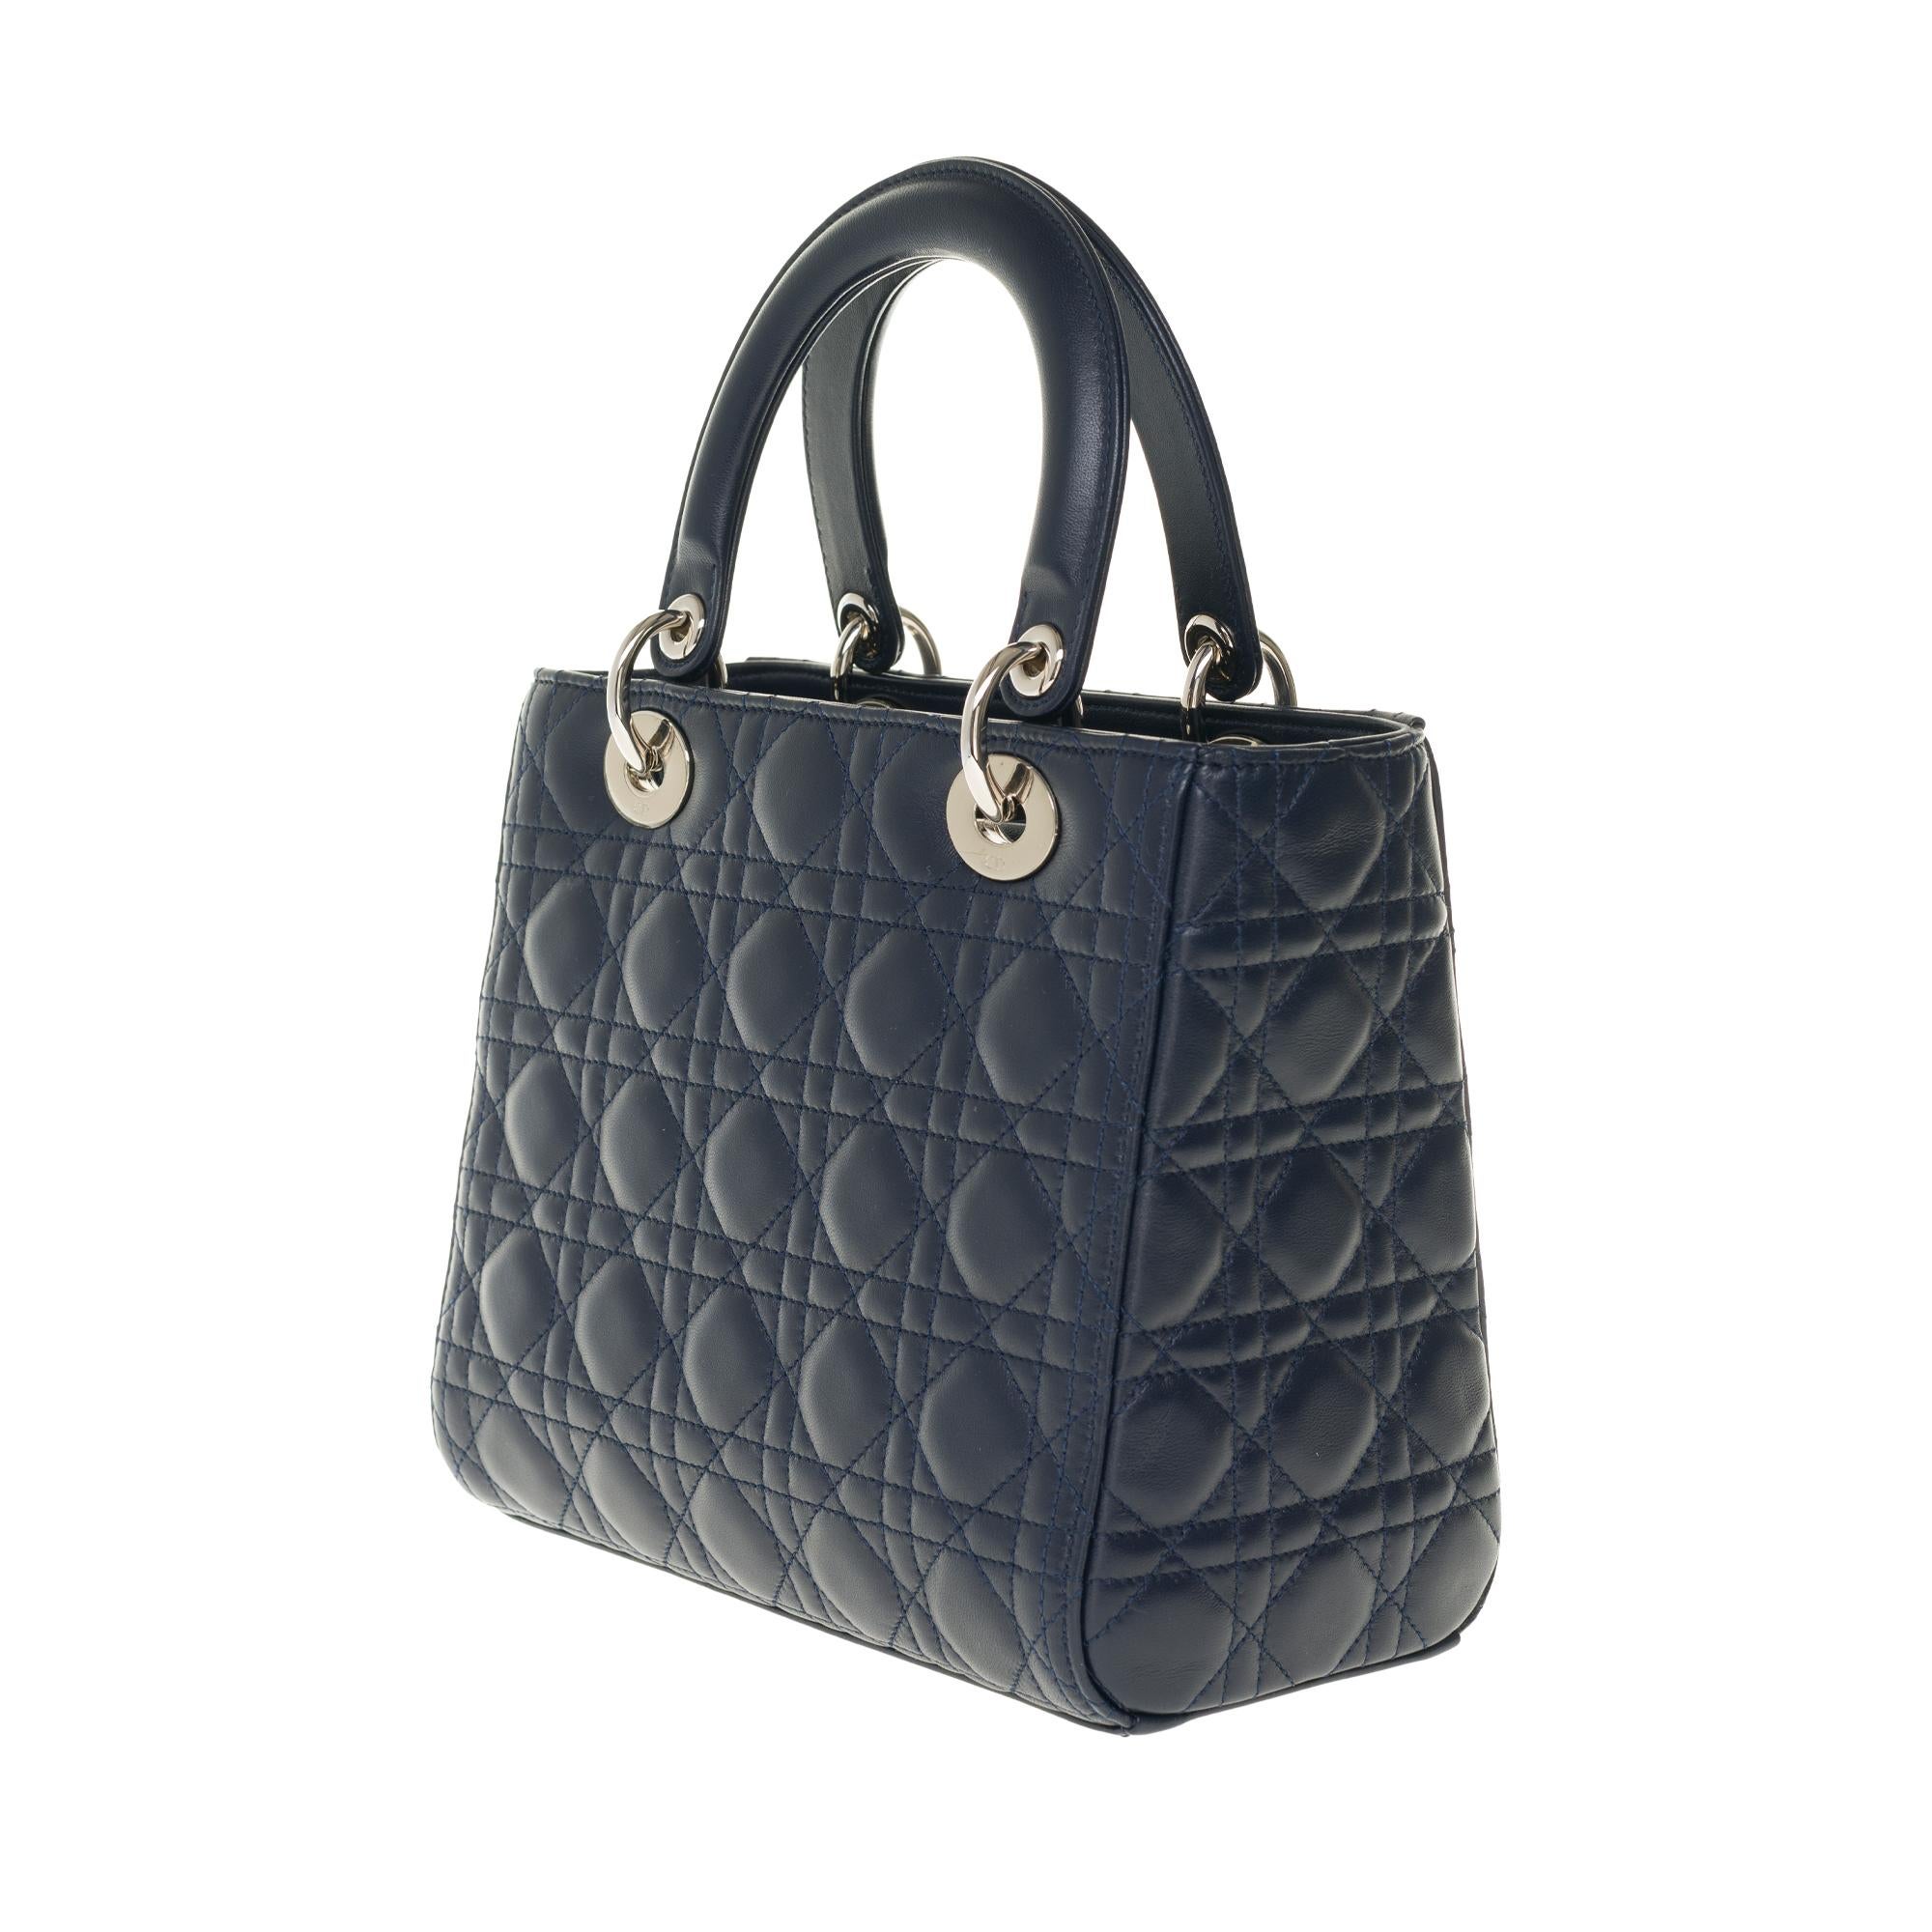  Christian Dior Lady Dior MM (Medium size) handbag in black cannage leather, SHW In New Condition In Paris, IDF